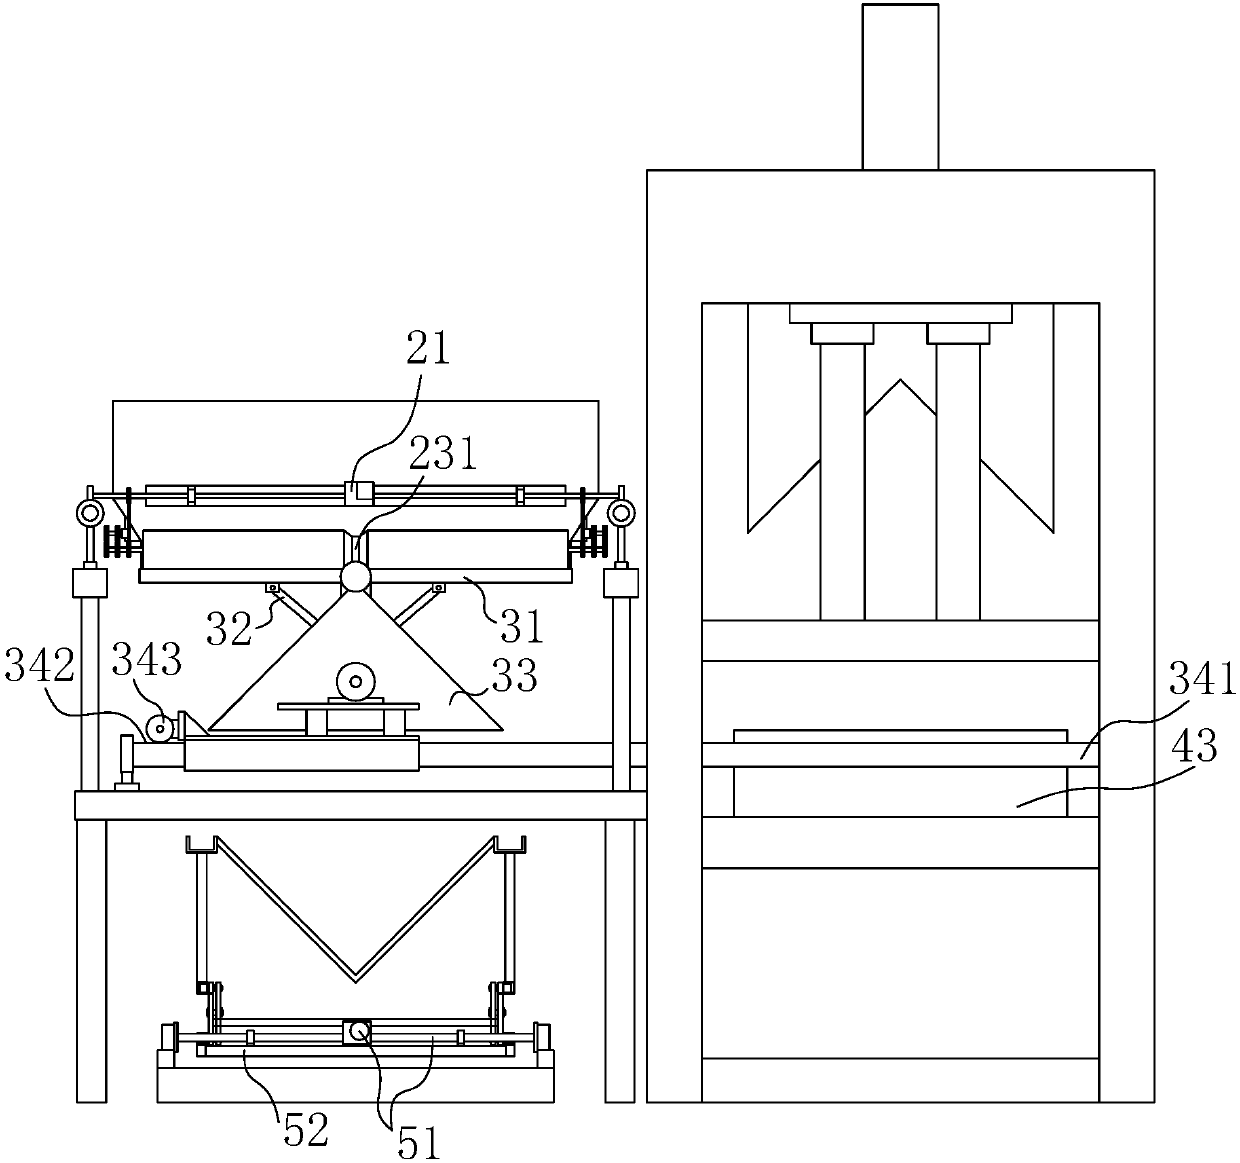 L-shaped plate vibration extrusion production line